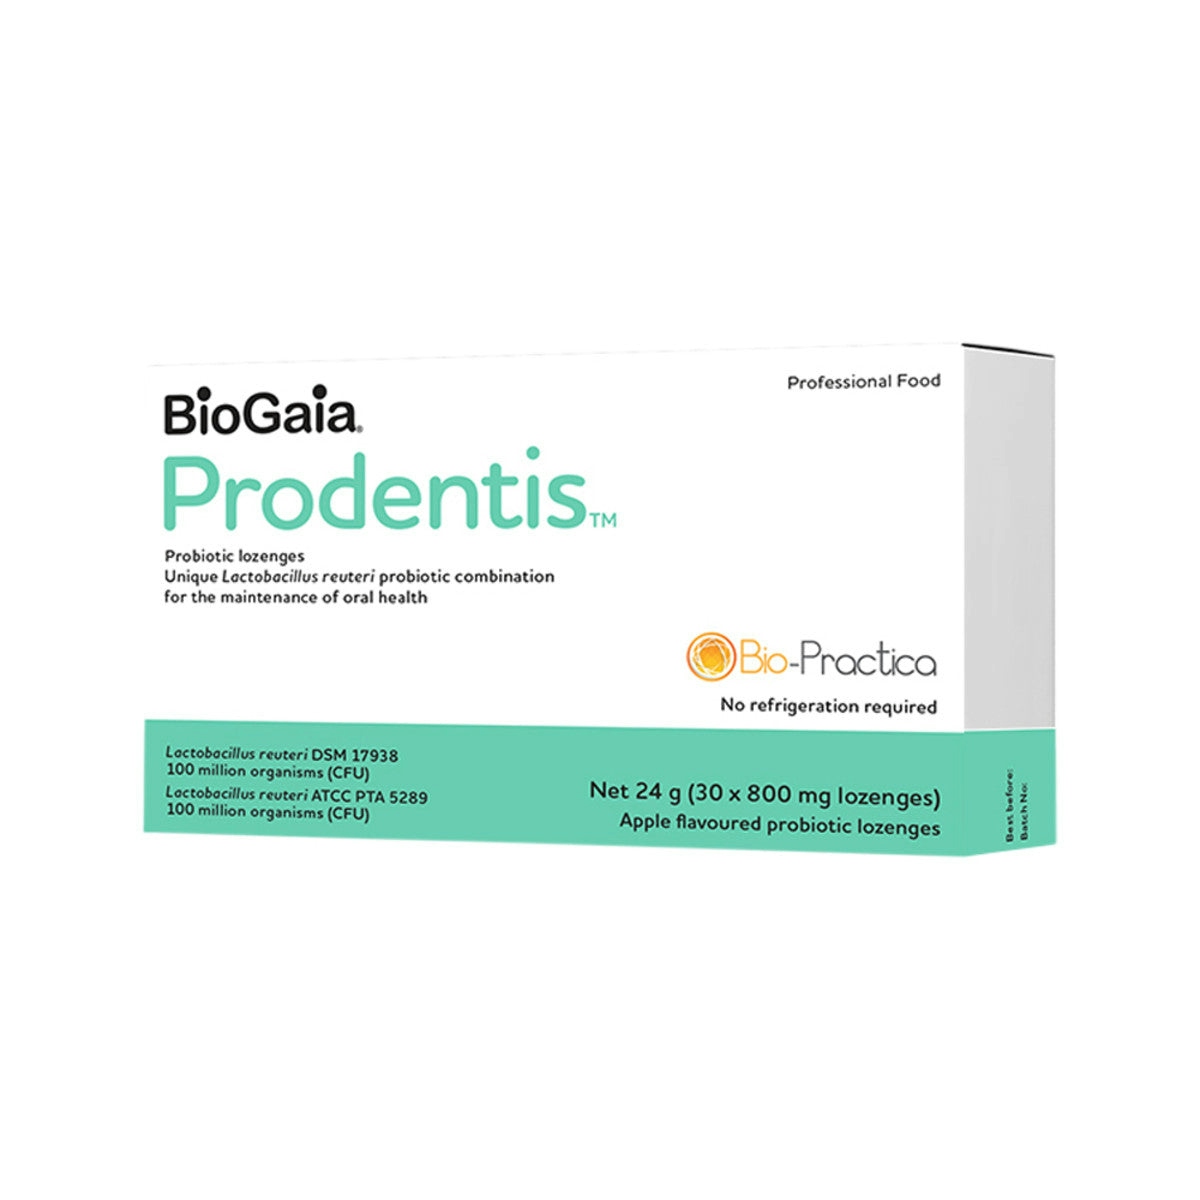 image of Bio-Practica BioGaia Prodentis Lozenges x 30 Pack on white background 